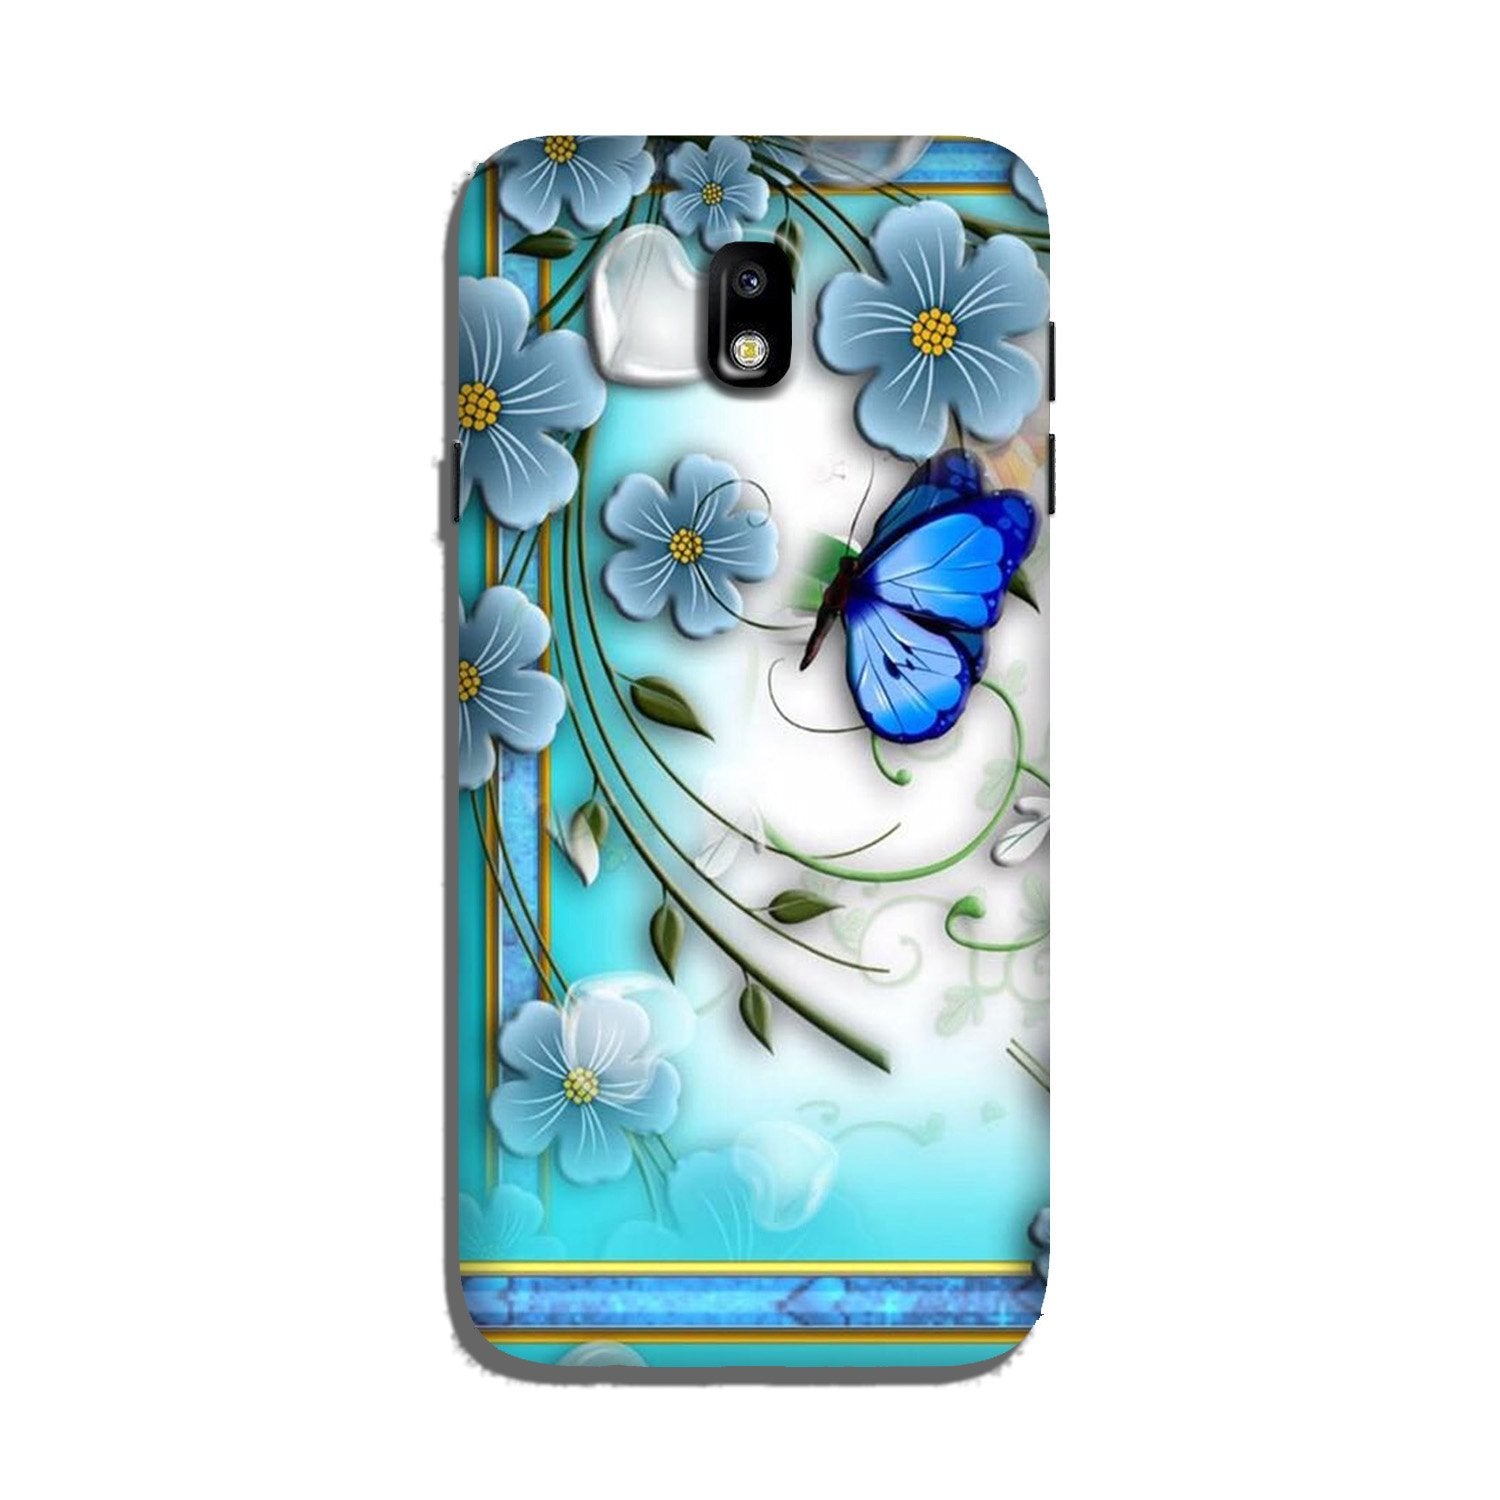 Blue Butterfly Case for Galaxy J5 Pro